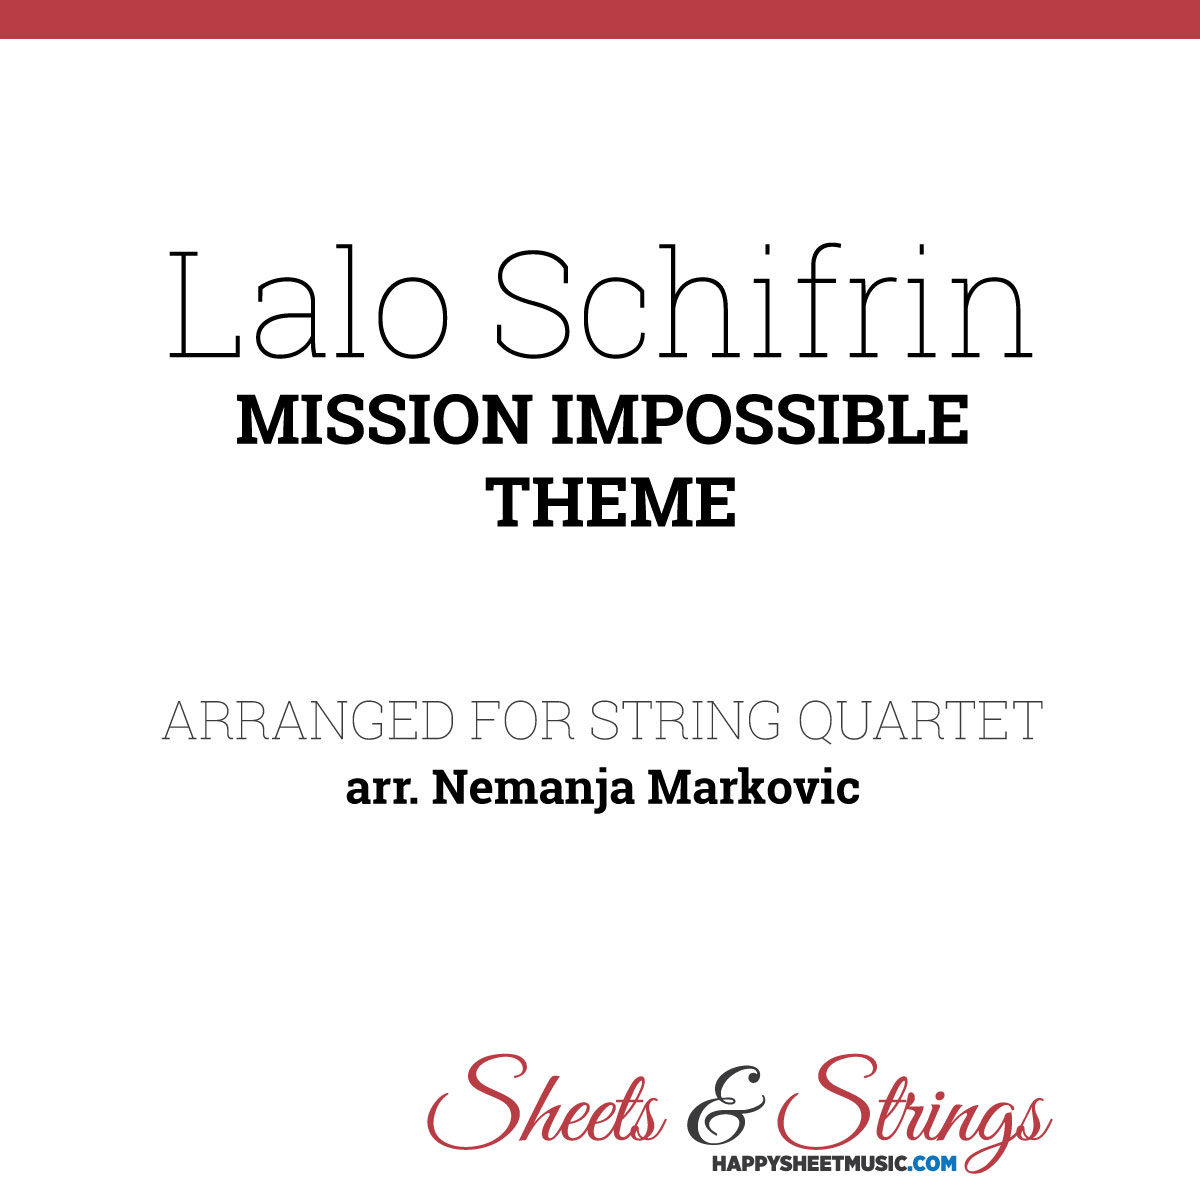 Lalo Schifrin - Mission Impossible Theme - Sheet Music for String Quartet - Music Arrangement for String Quartet